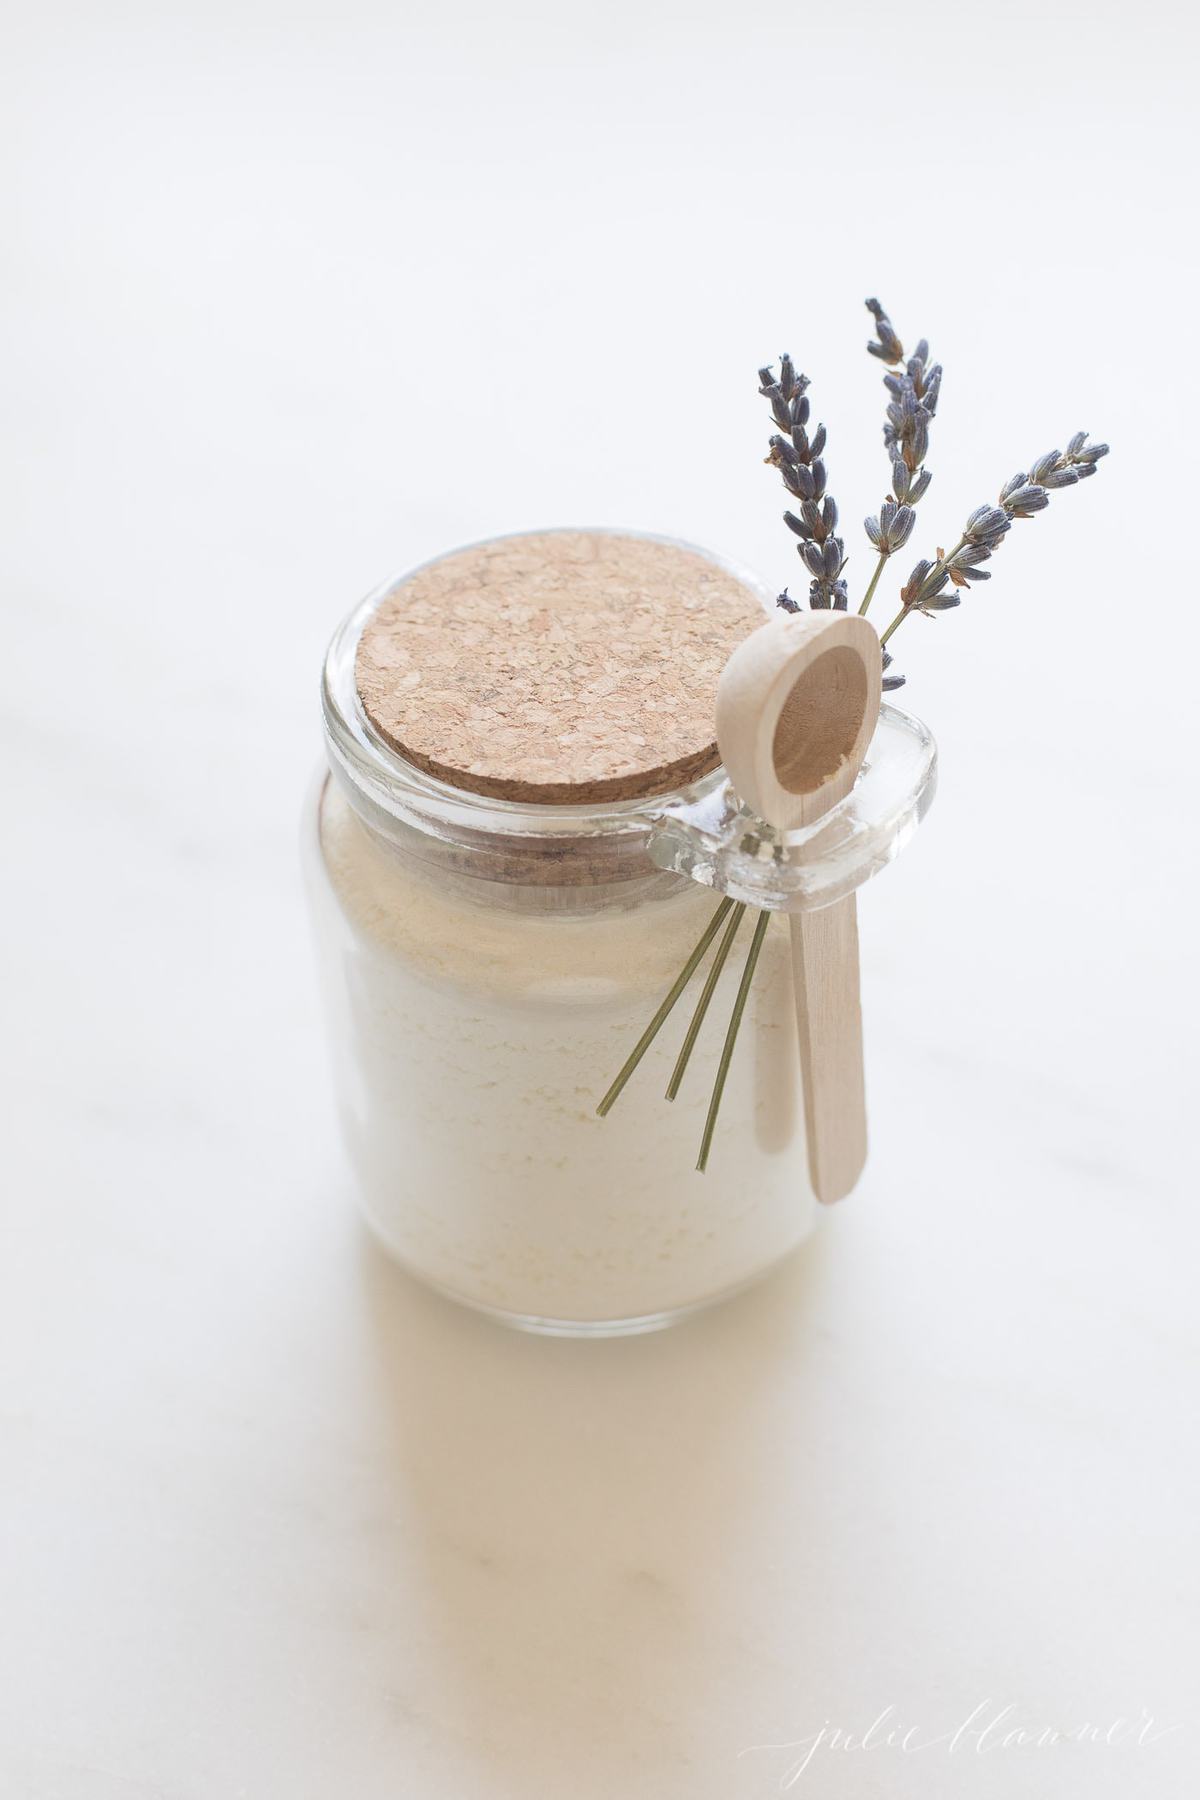 homemade bath recipe in glass jar with spoon